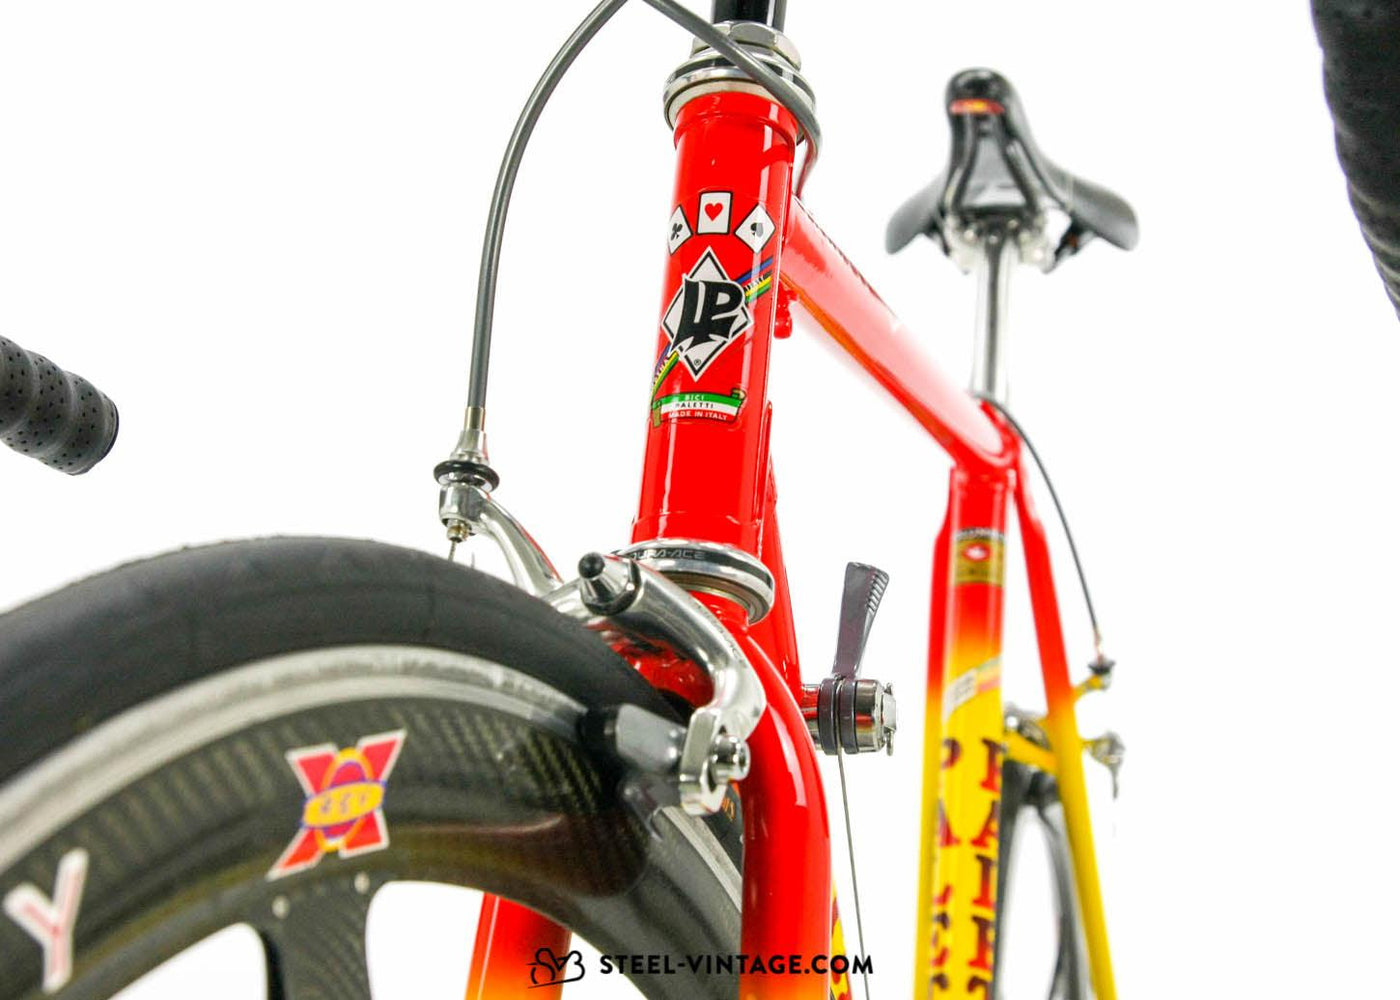 Paletti EL-OS Classic Italian Road Bike 1990 - Steel Vintage Bikes